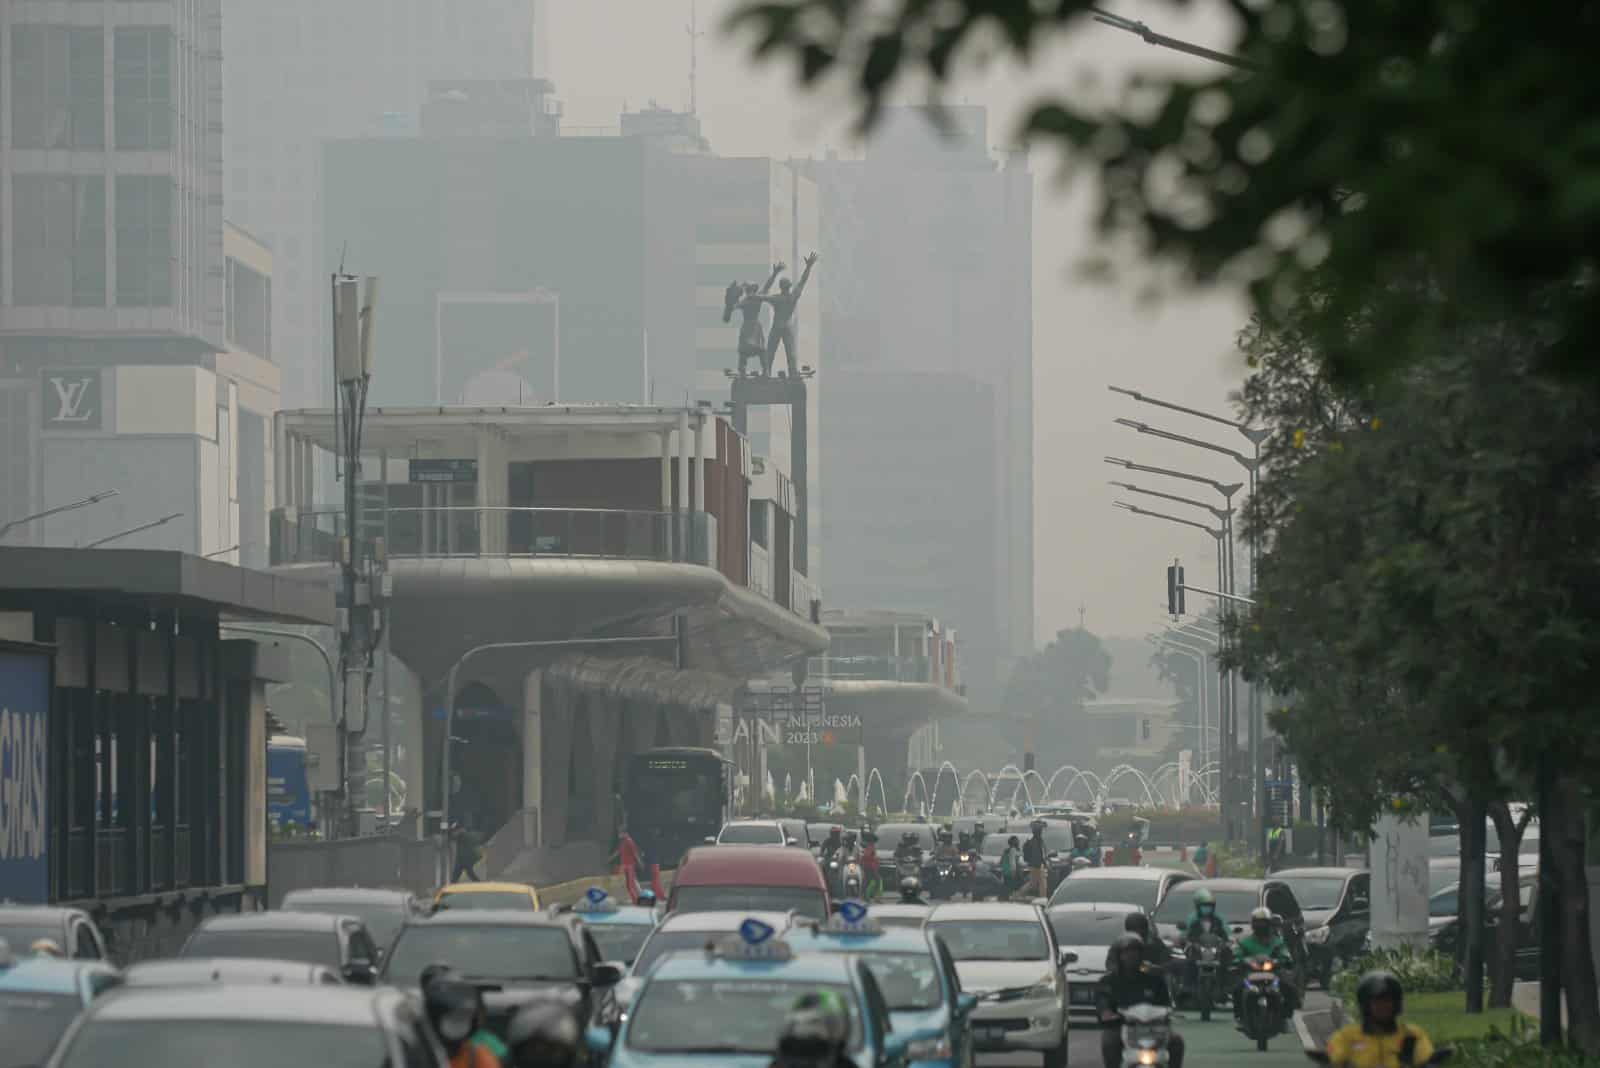 Image Credit: Shutterstock / Wulandari Wulandari <p>Cities like Delhi, Beijing, and Jakarta suffer from severe air pollution. Travelers with respiratory issues should take necessary precautions.</p>